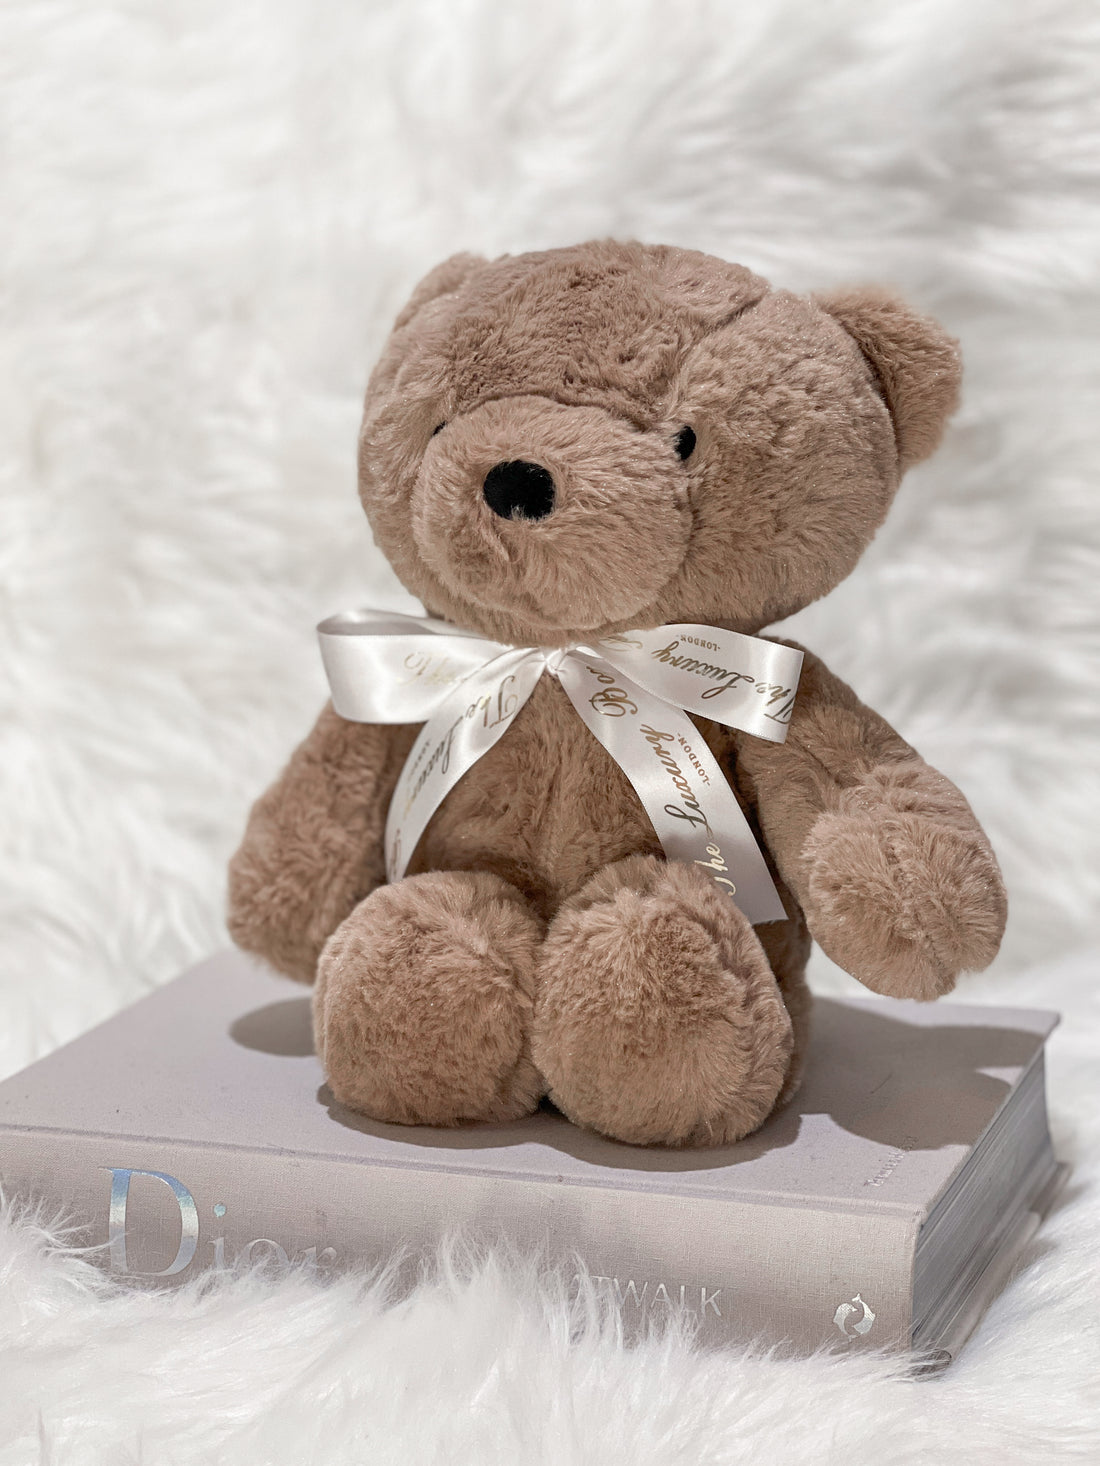 Cute Classic Teddy Bear with Ribbon